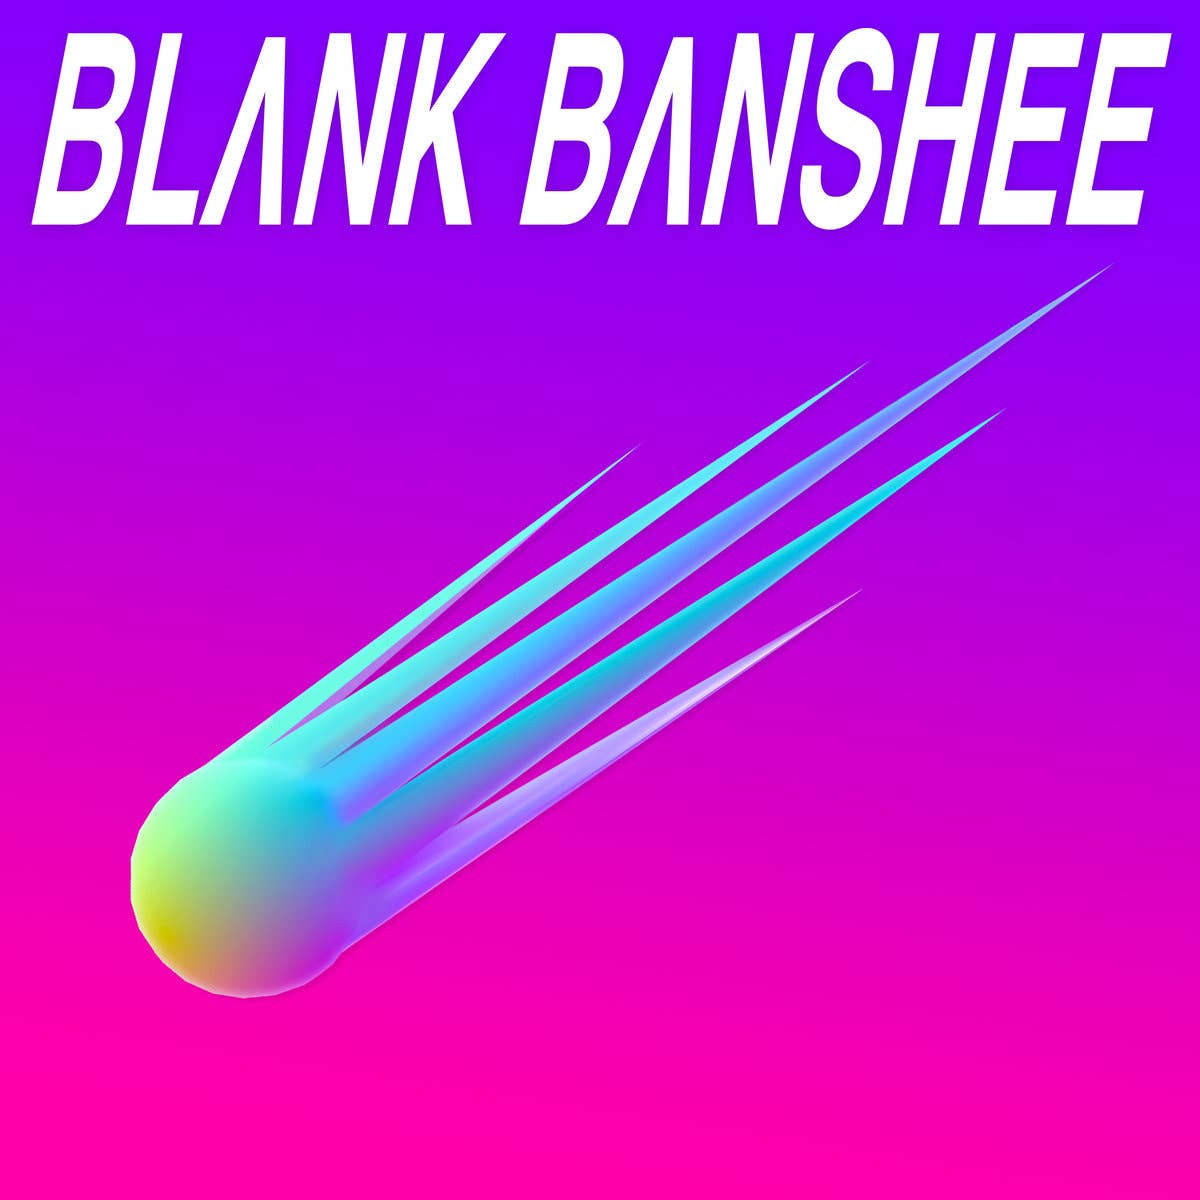 Blank Banshee's 'Mega' cover art.